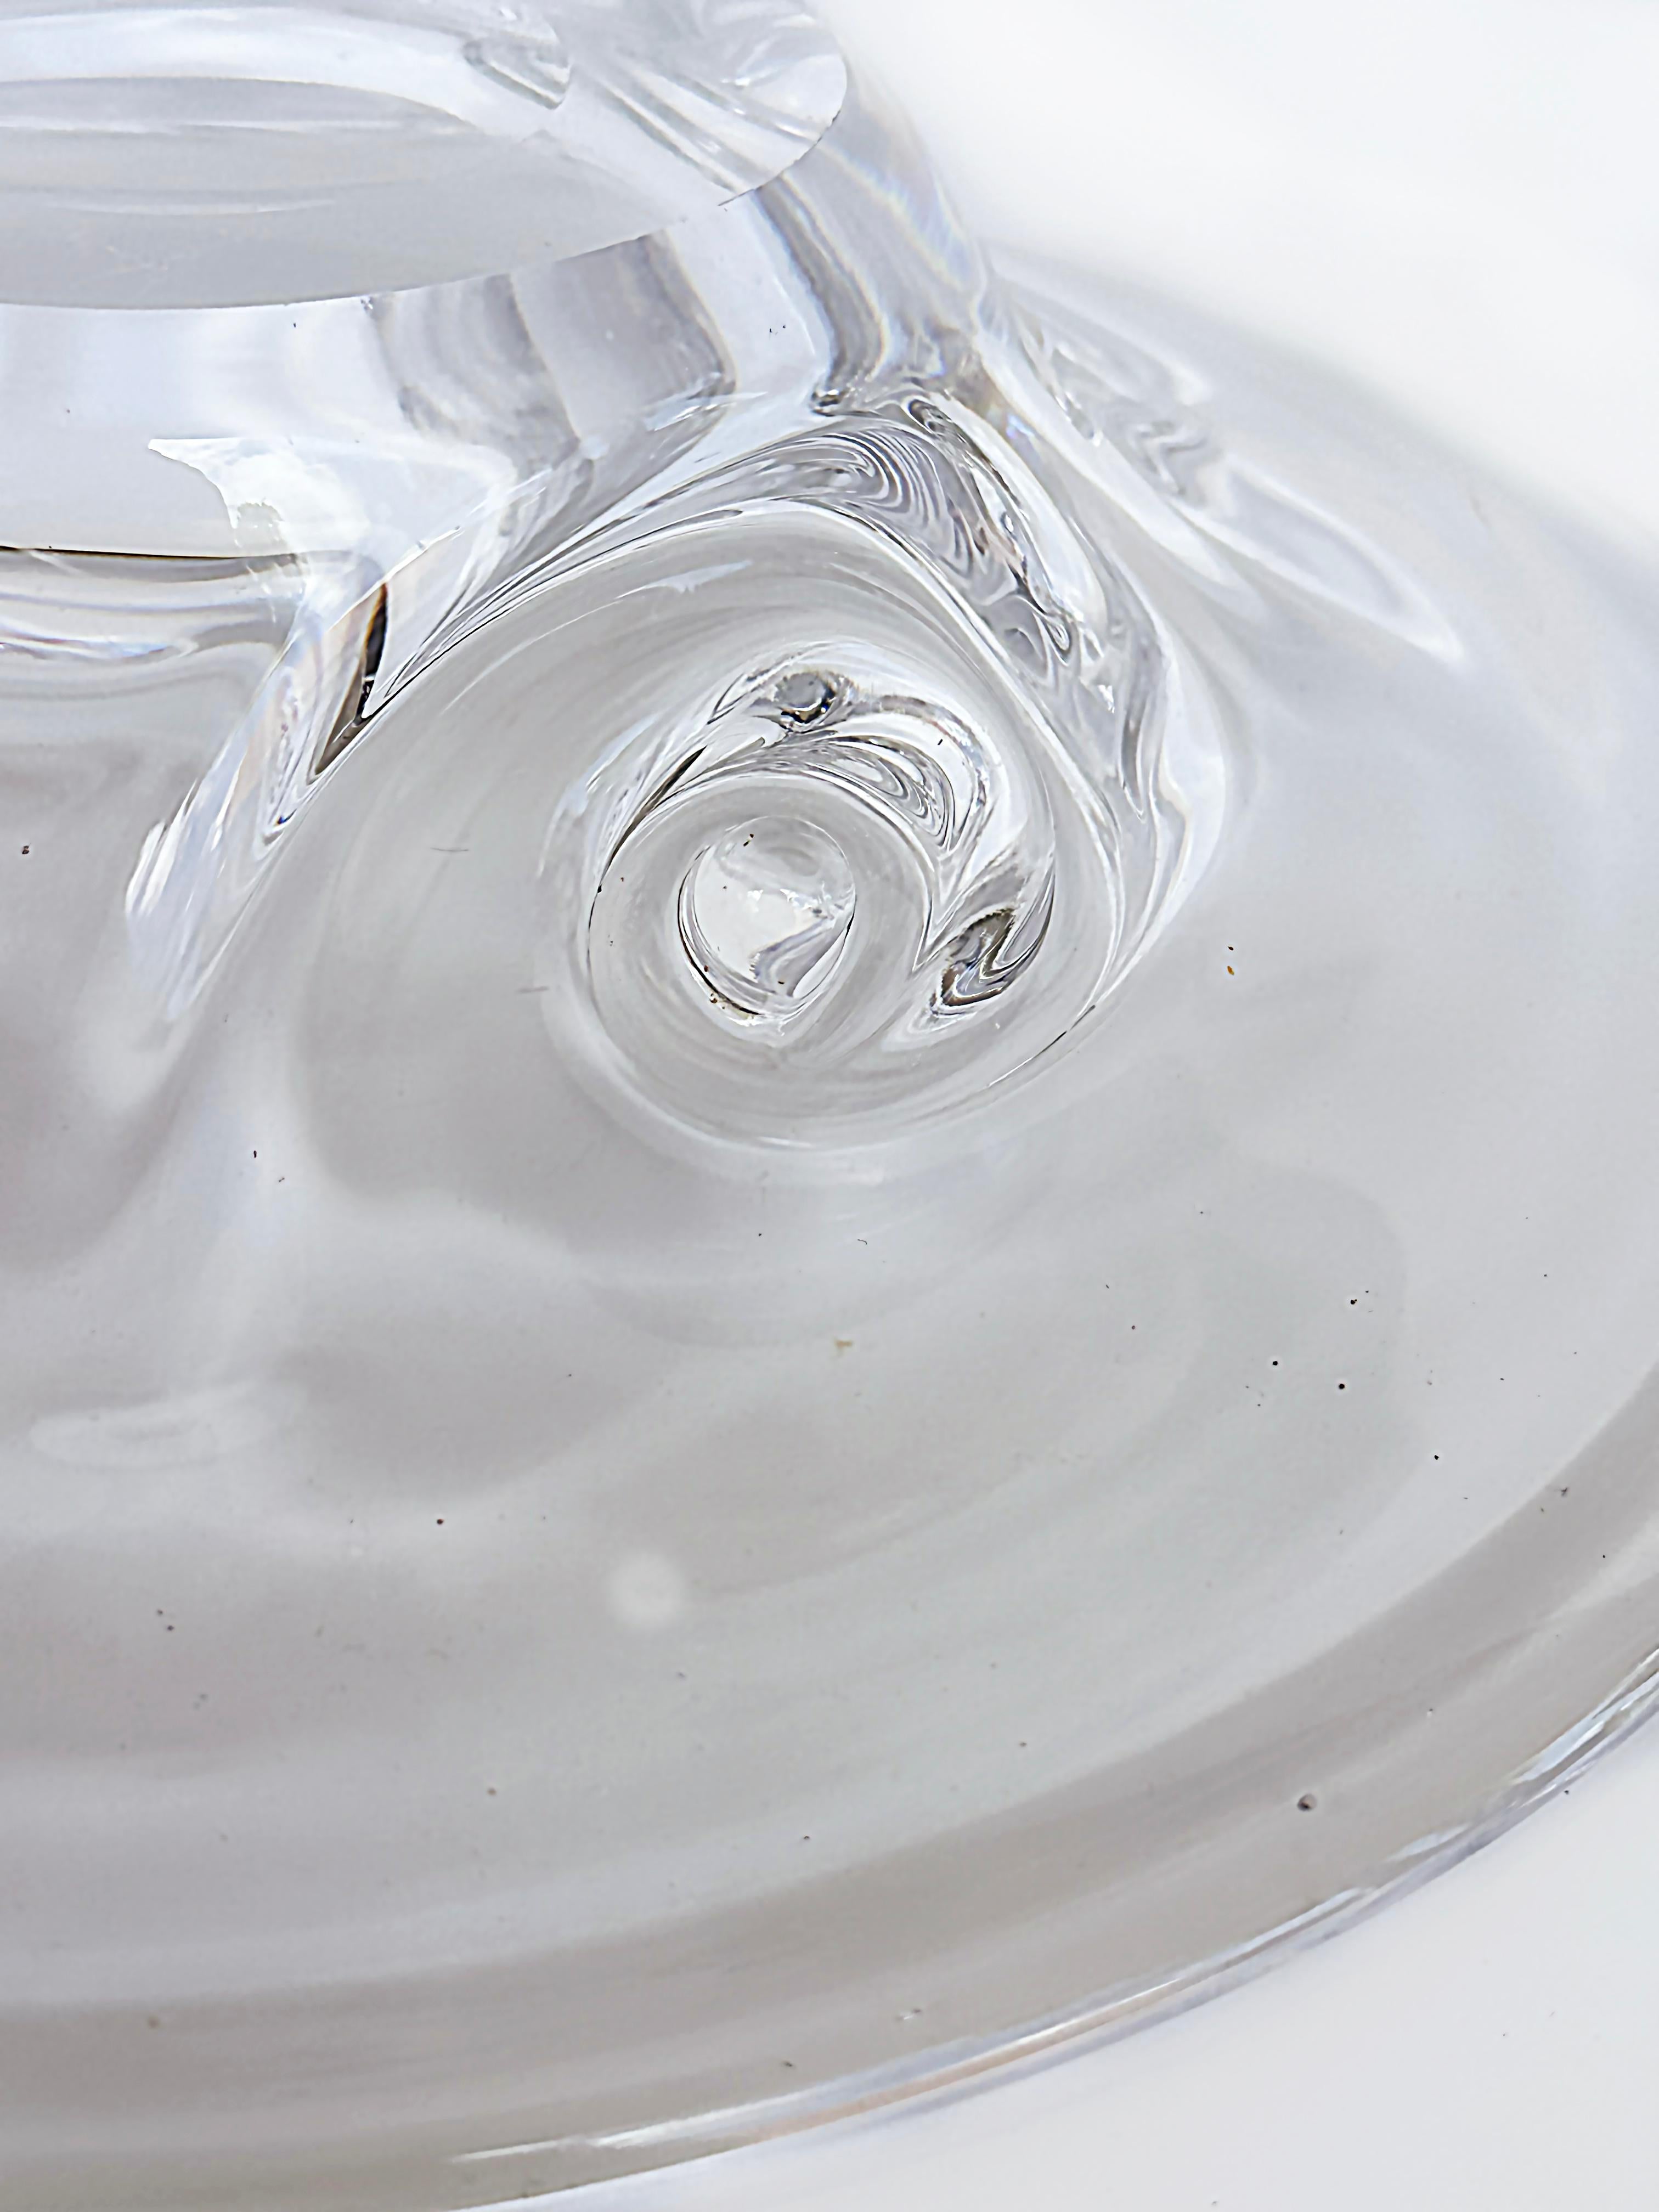 Kosta Boda Sweden Goran Warff Modernist Art Glass Bowl with Swirl Designs For Sale 1